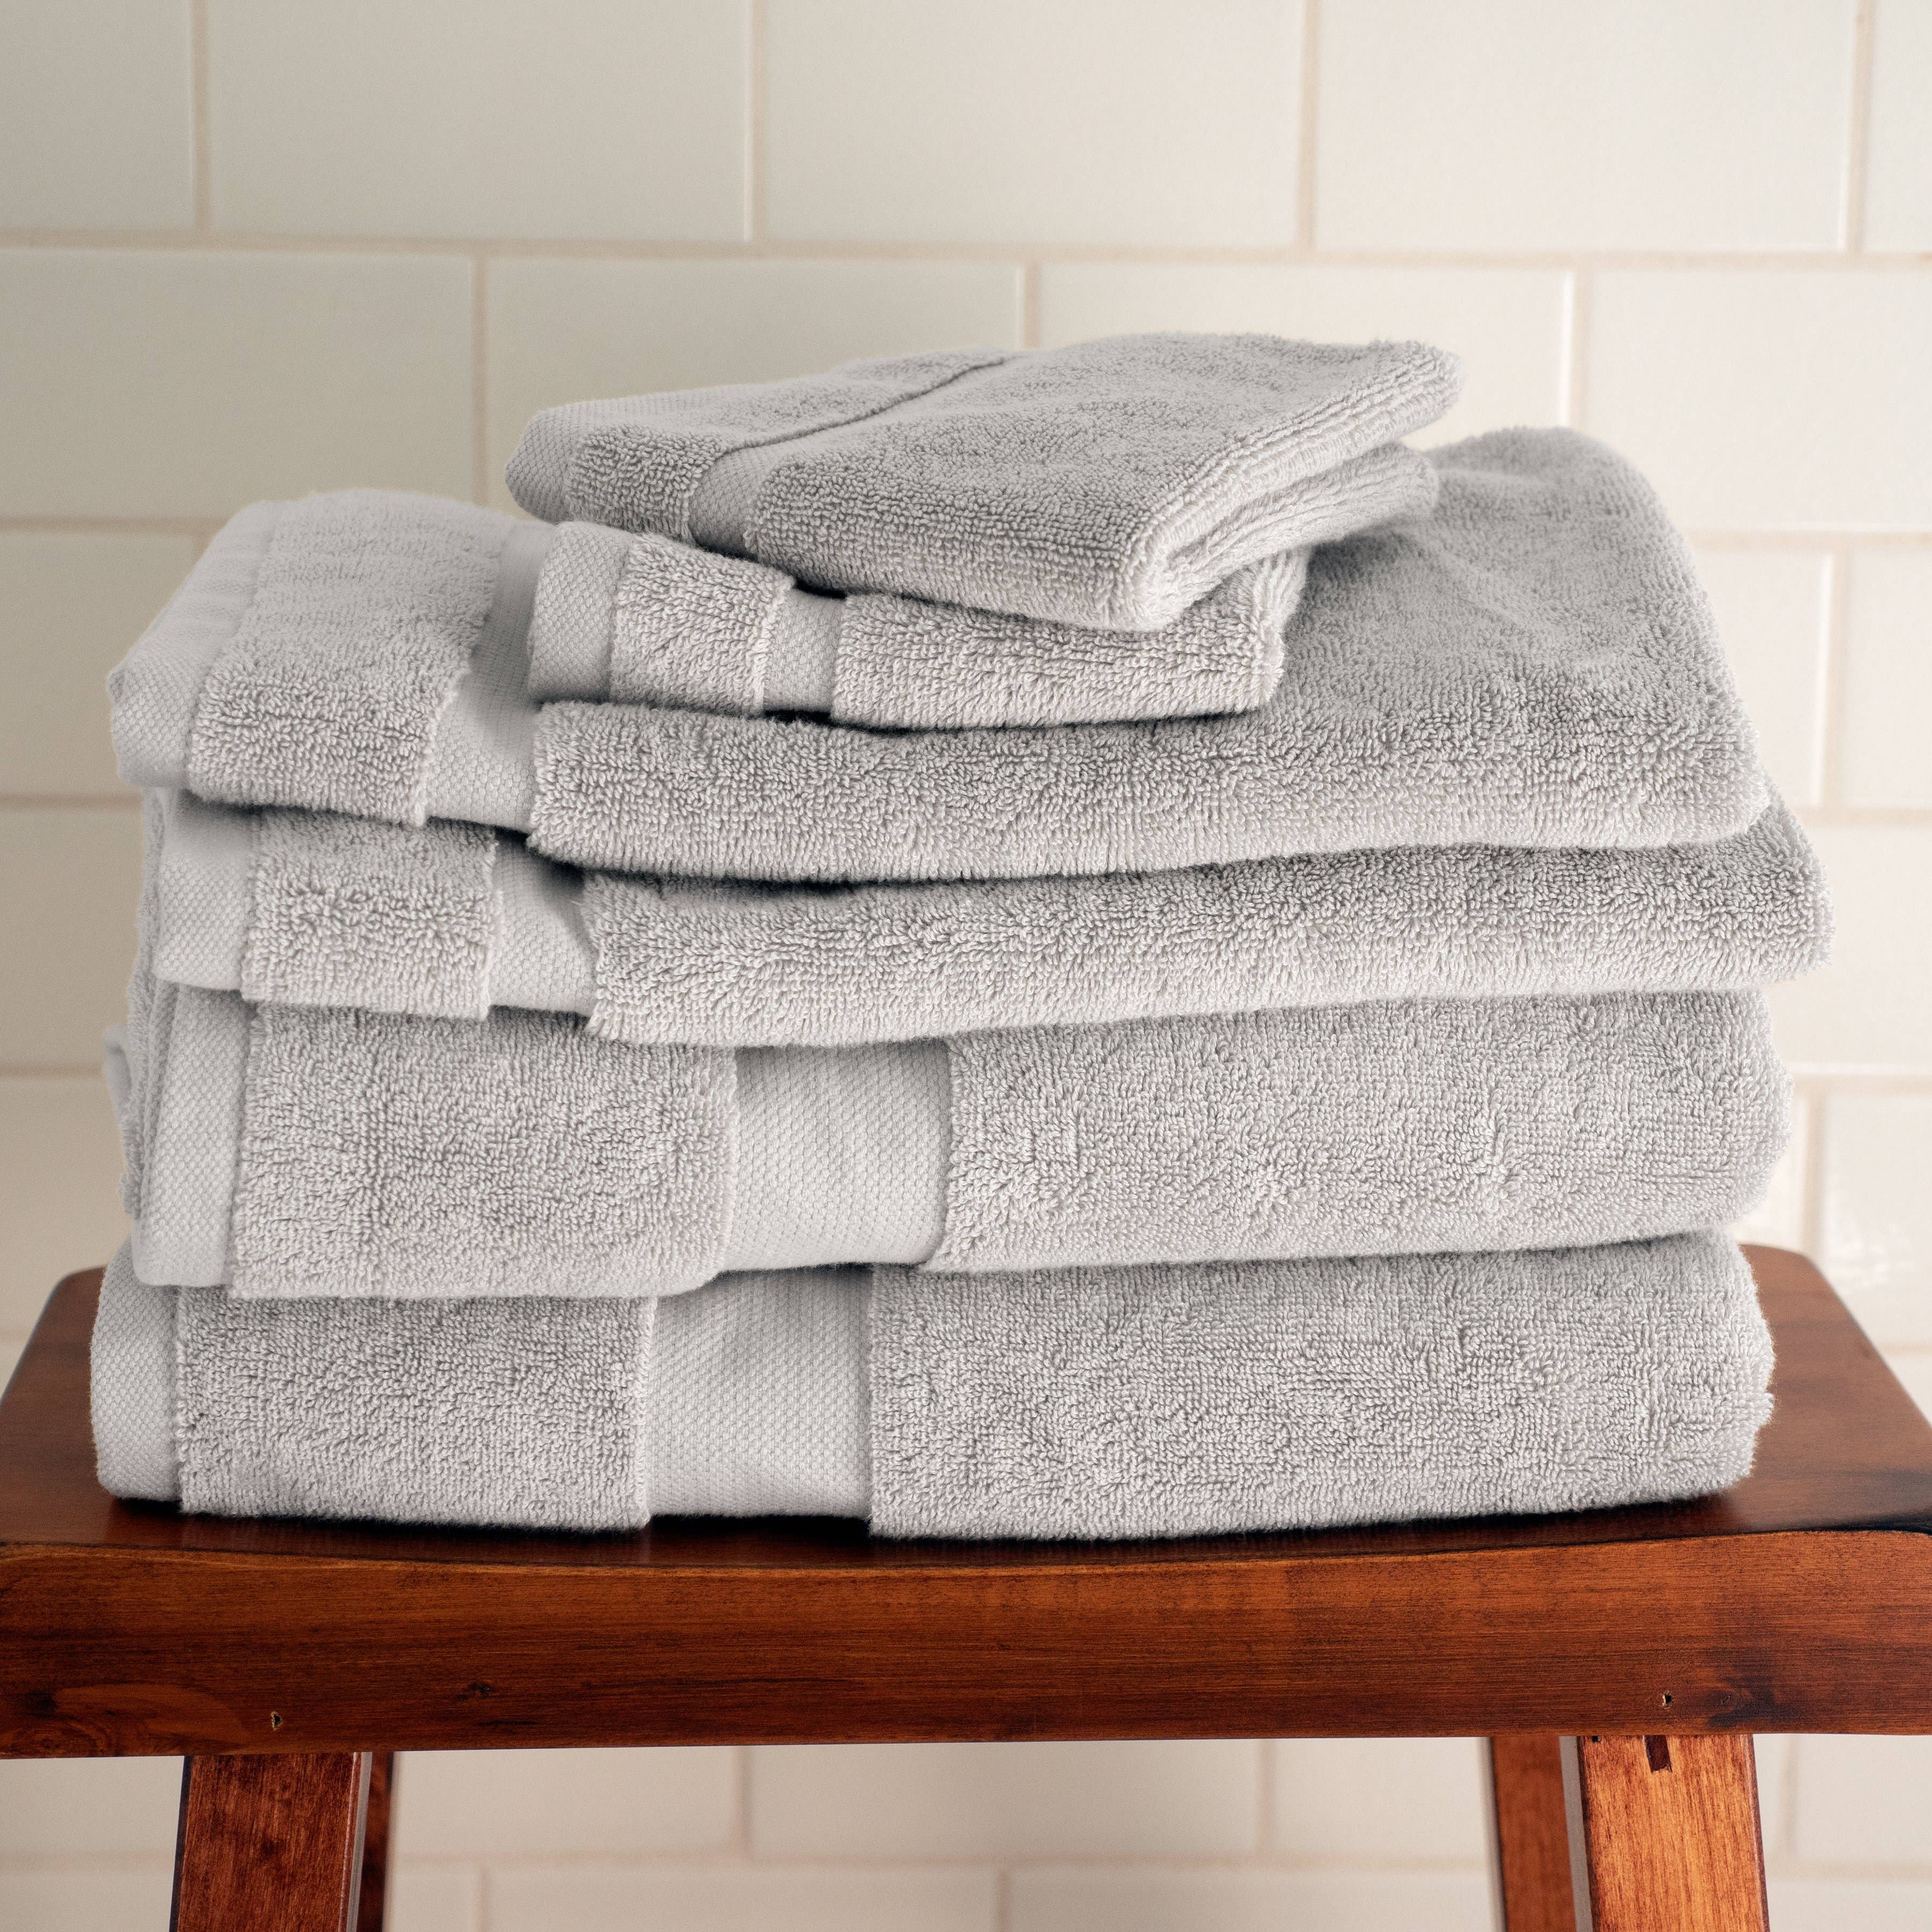 KAF Home - Canopy Lane Bath Towel Set/6 - 2 Bath, 2 Hand, 2 Wash Cloth